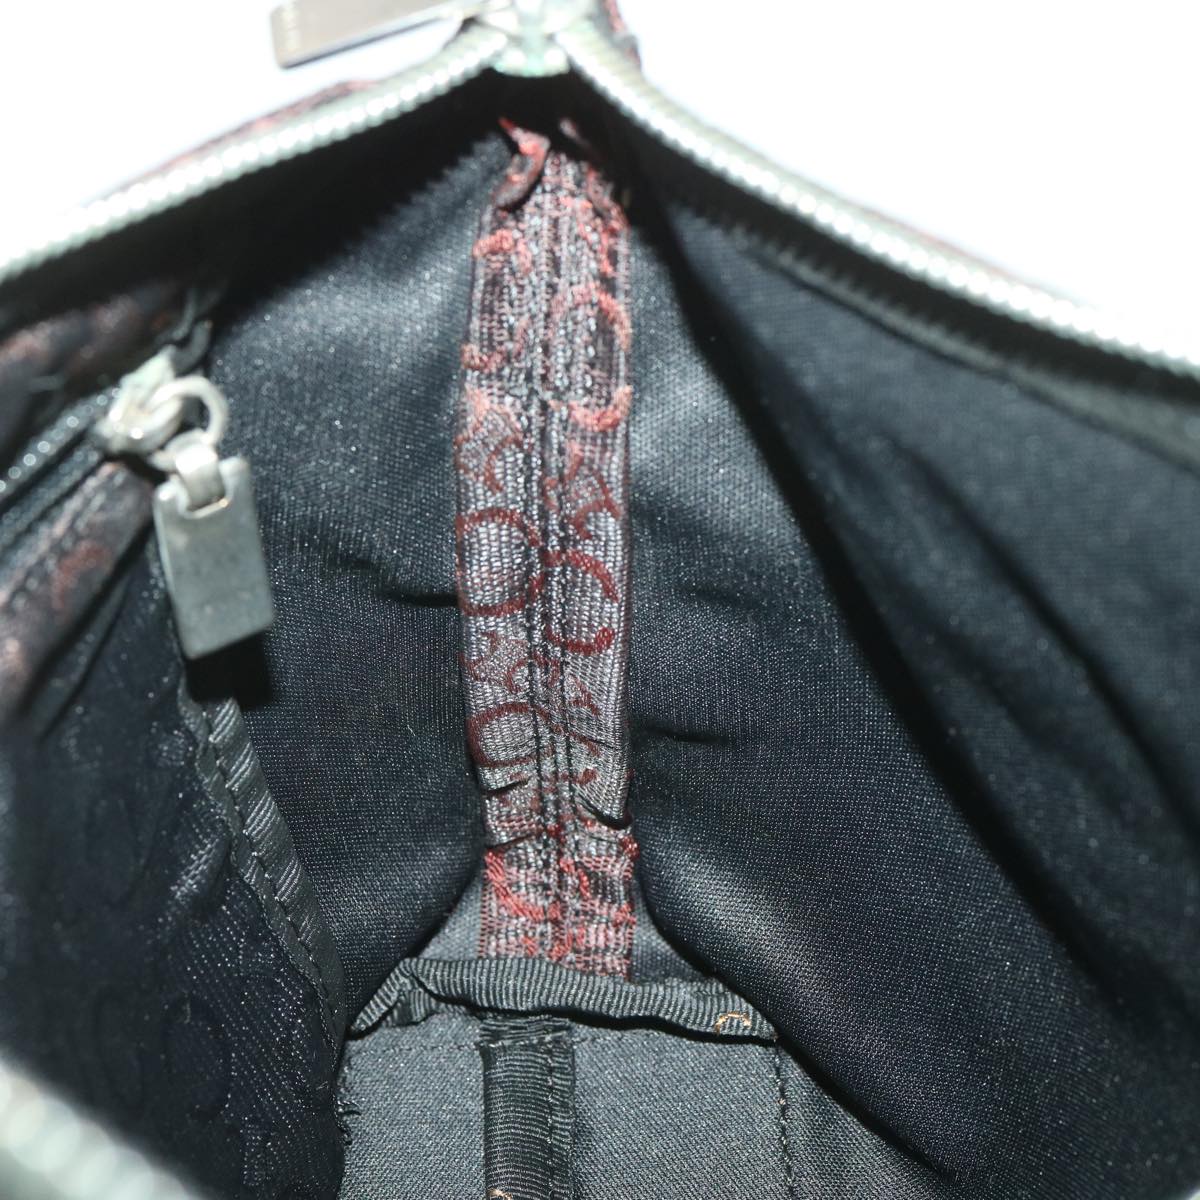 CELINE C Macadam Canvas Shoulder Bag Black Auth ar9020